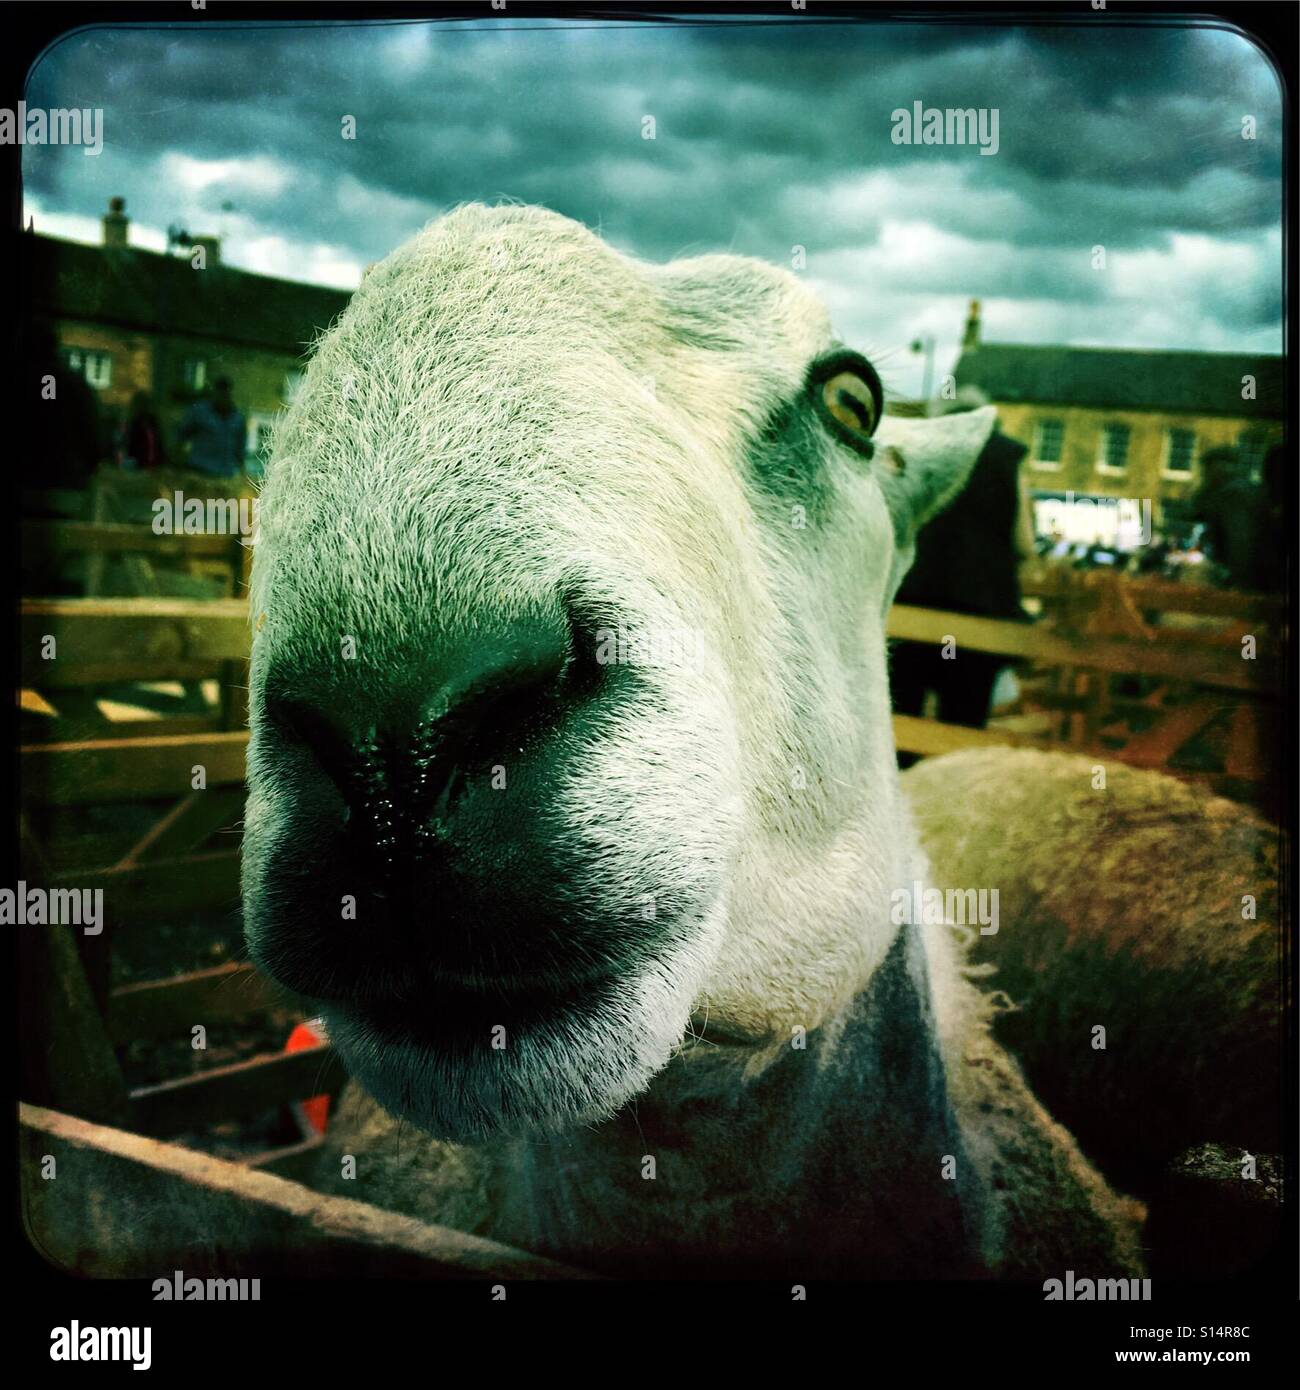 Blue Faced Leicester ewe at Masham Sheep Fair, North Yorkshire, England. UK Stock Photo